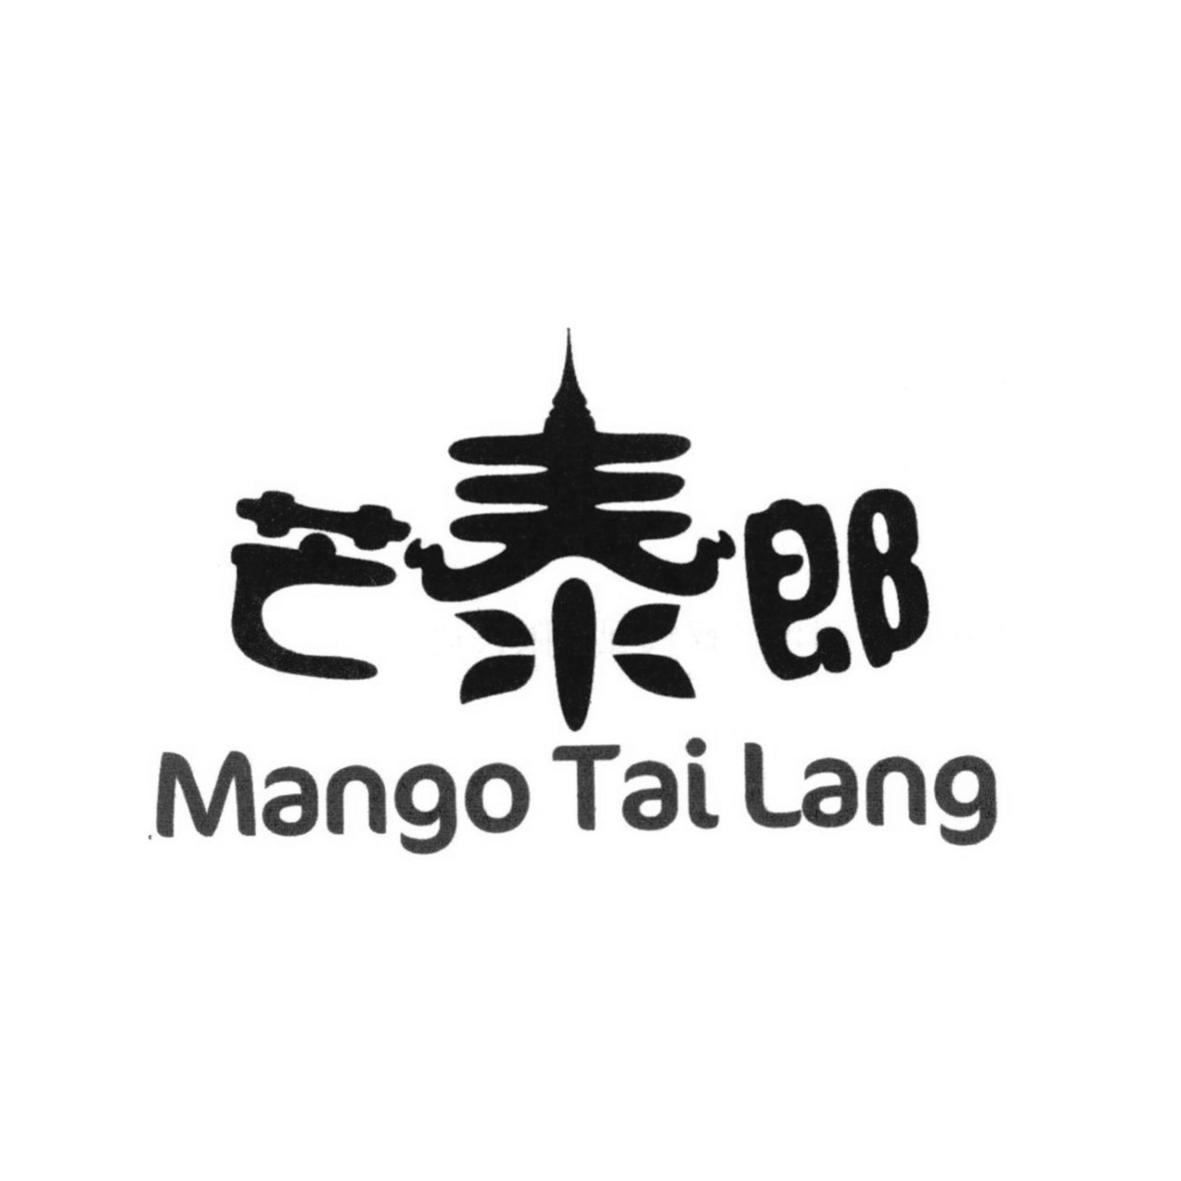 29类-食品芒泰郎  MANGO TAILANG商标转让